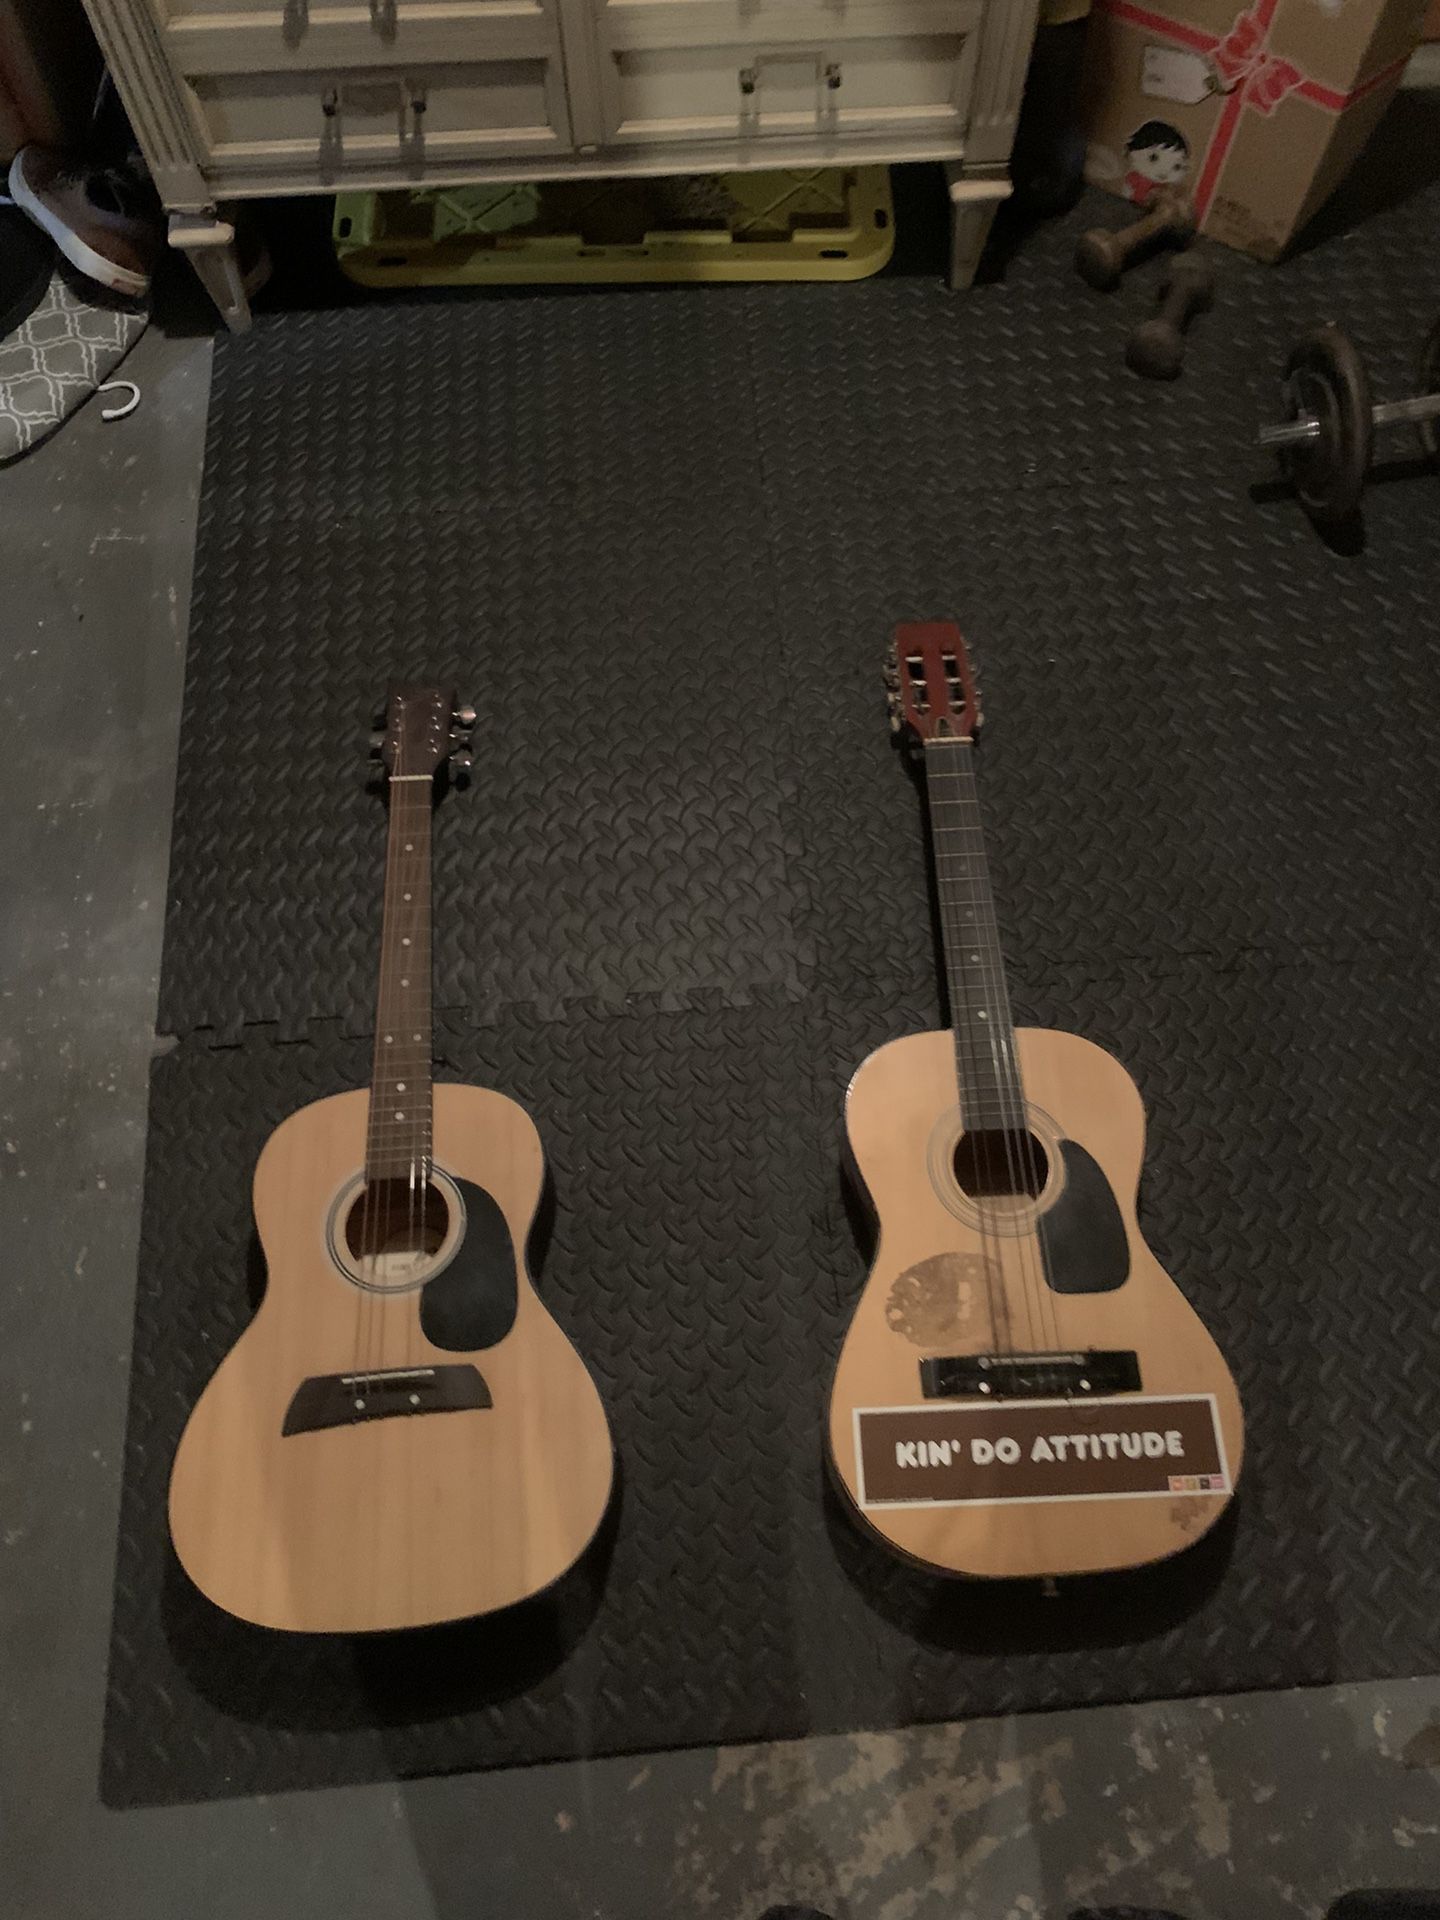 Two Beginner Acoustic Guitars